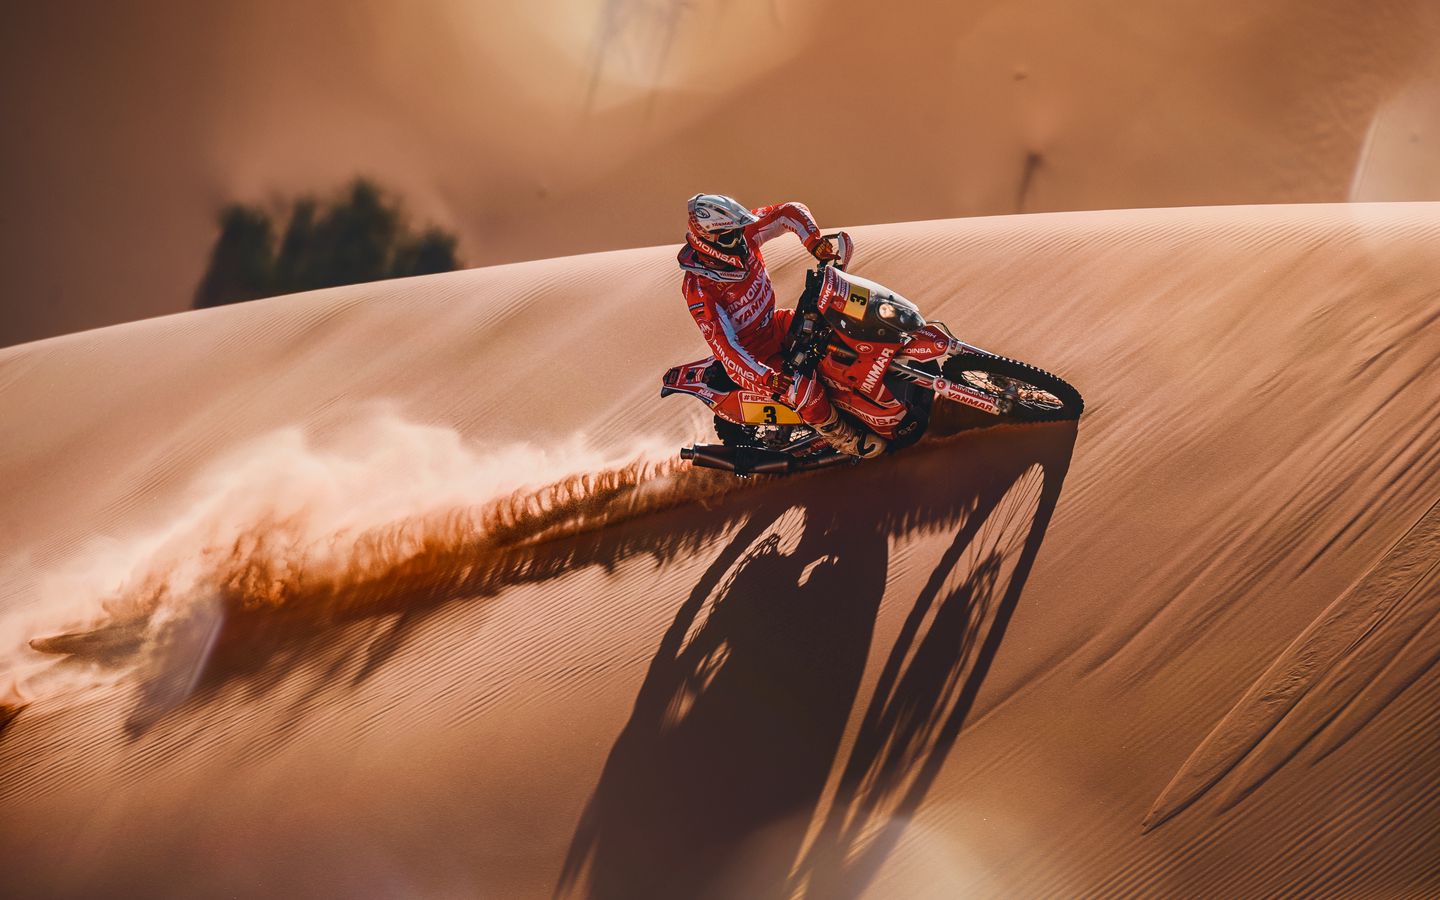 Download Wallpaper 1440x900 Ktm Motorcycle Bike Motorcyclist Desert